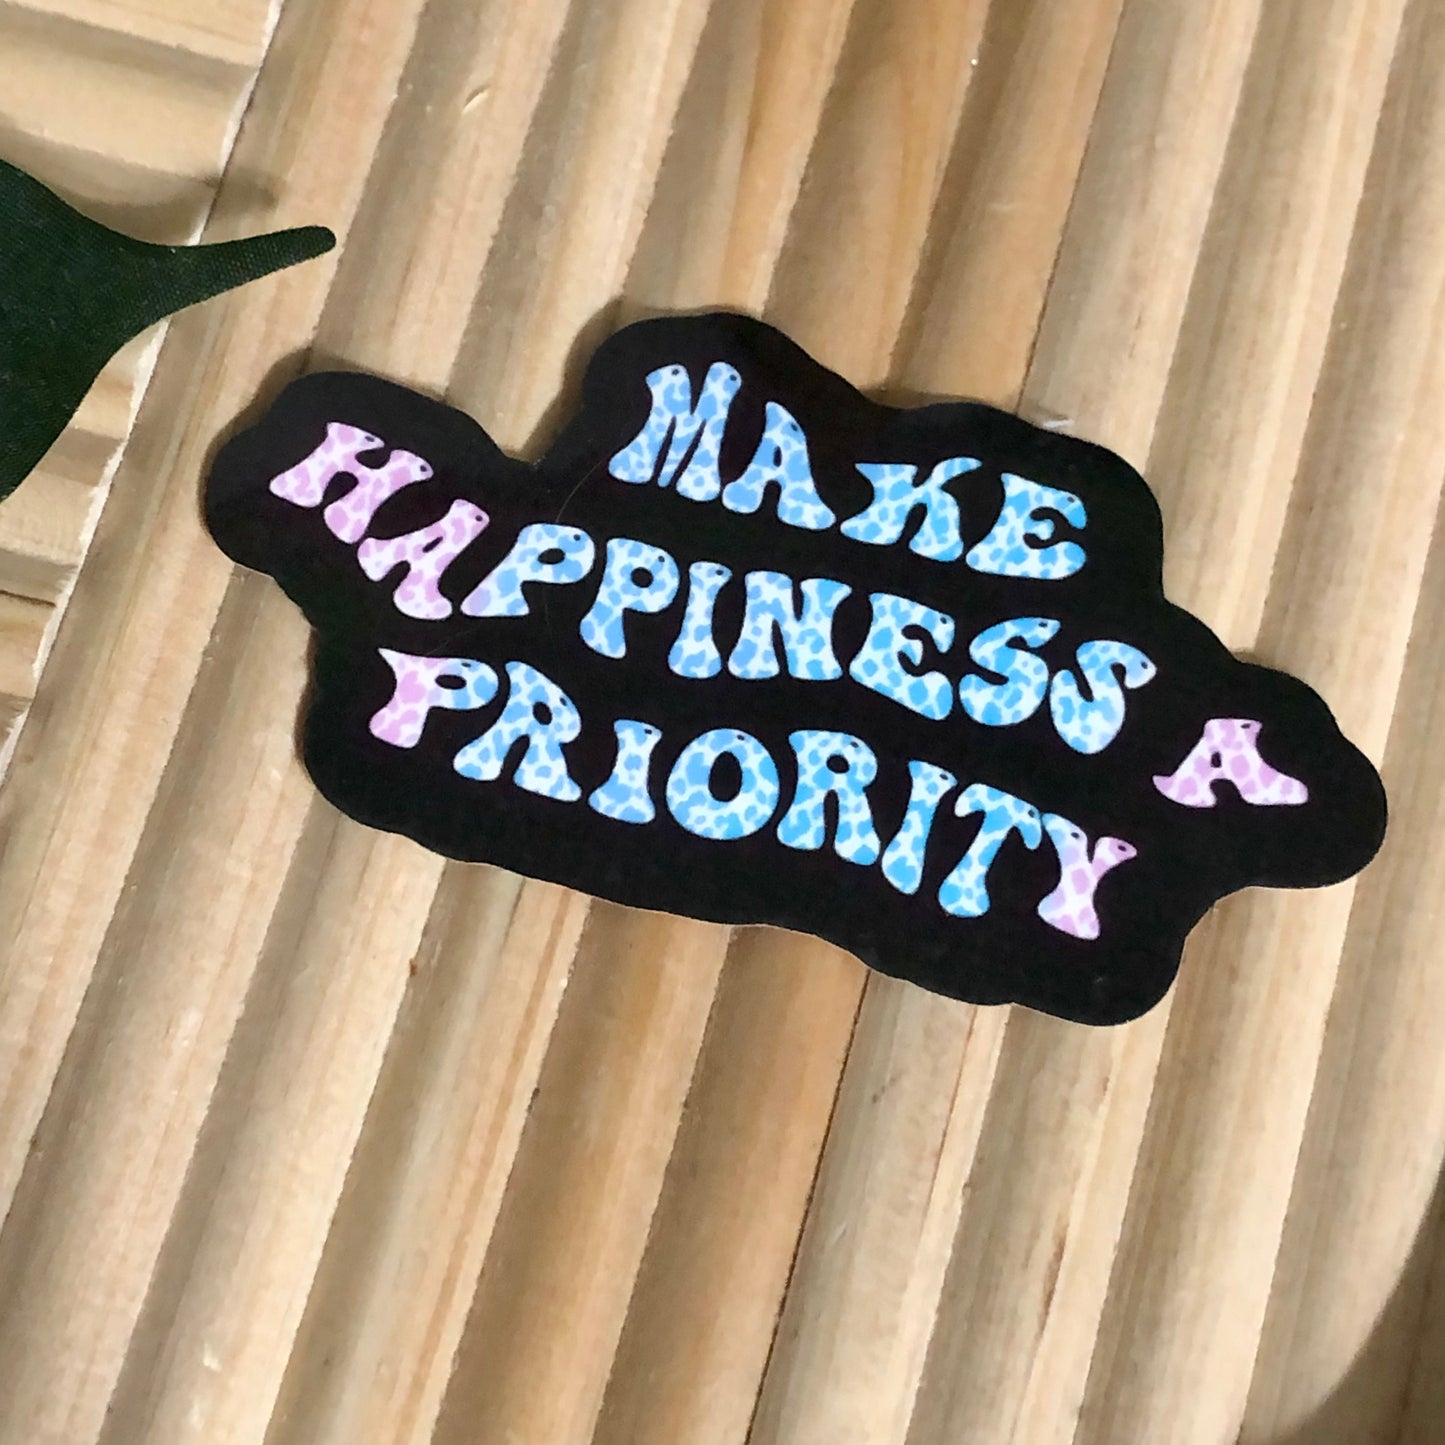 Make Happiness A Priority Black Vinyl Sticker.